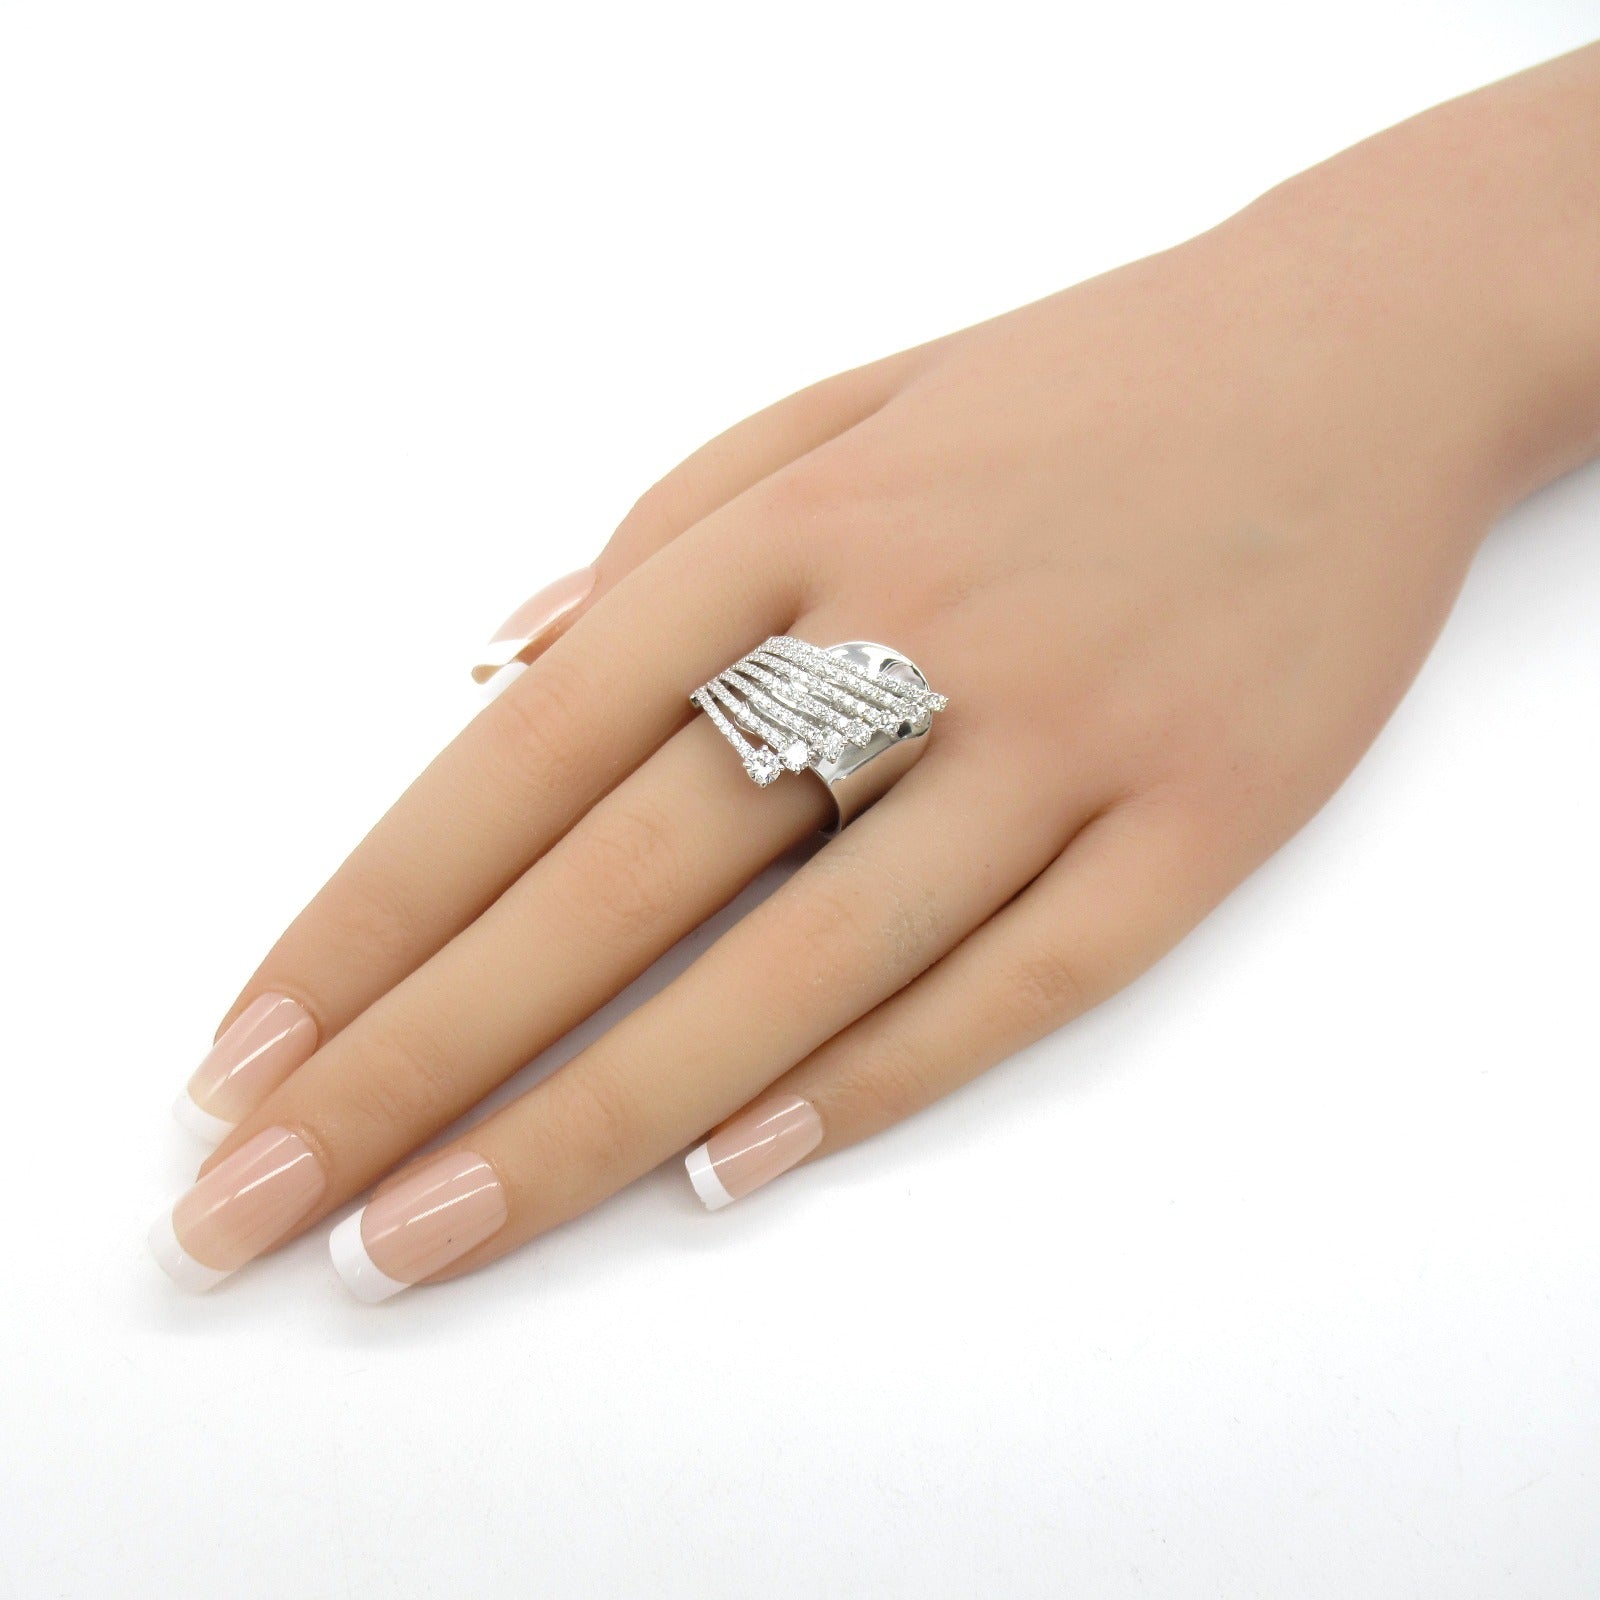 Jewelry Jewelry Diamond Ring Ring Ring Jewelry K18WG (White G) Diamond  Clear Diamond 12.8g